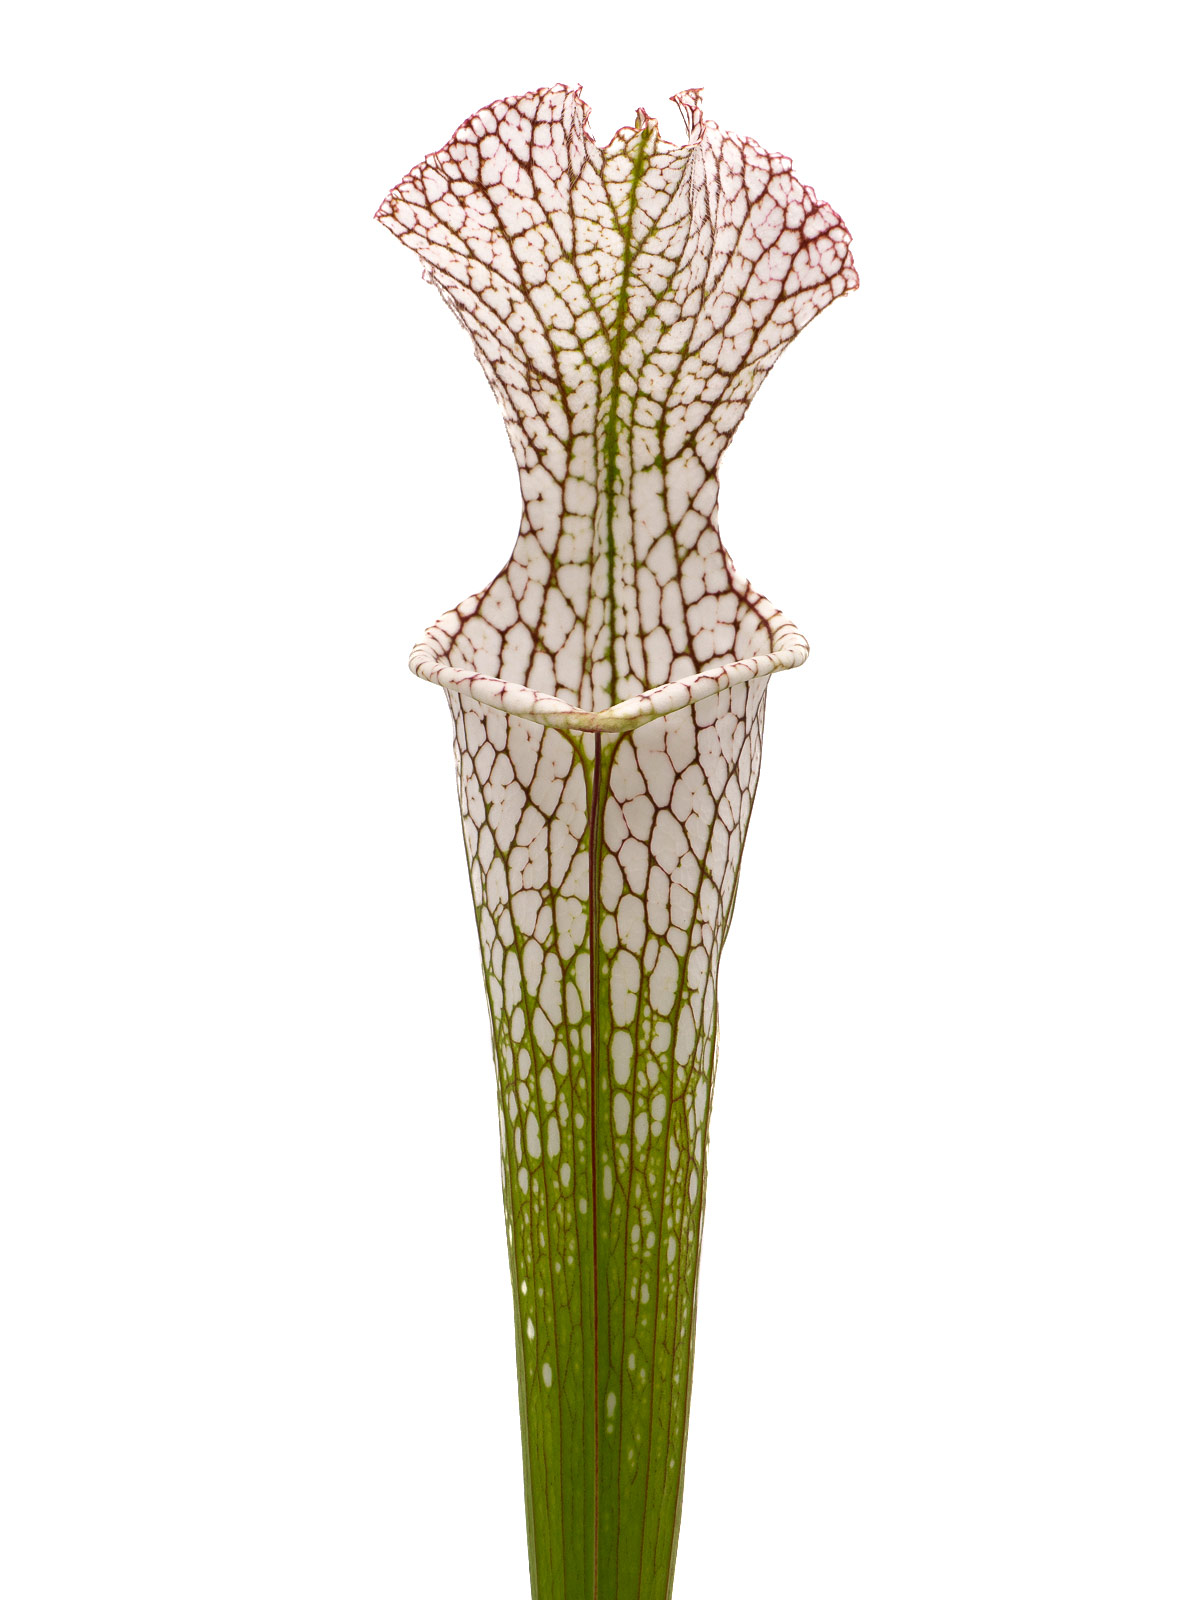 Sarracenia leucophylla - very tall grower, EEE 2011